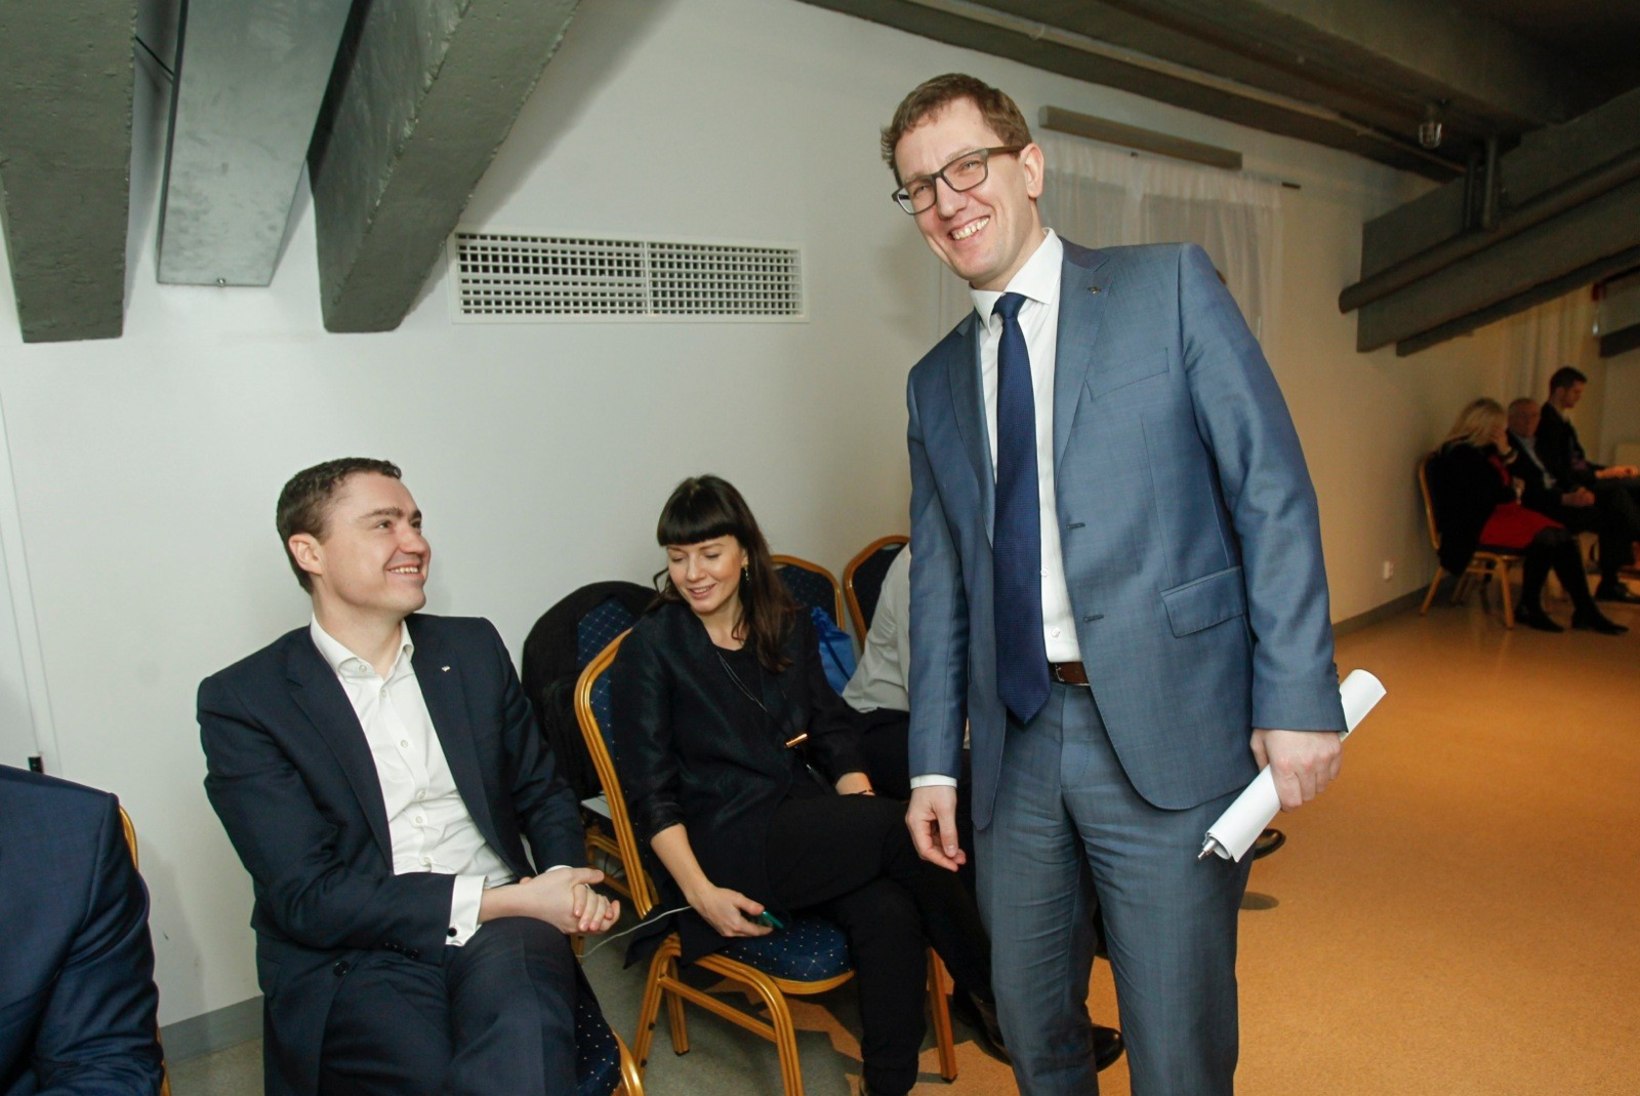 Kristen Michal on valmis kandideerima Tallinna linnapeaks